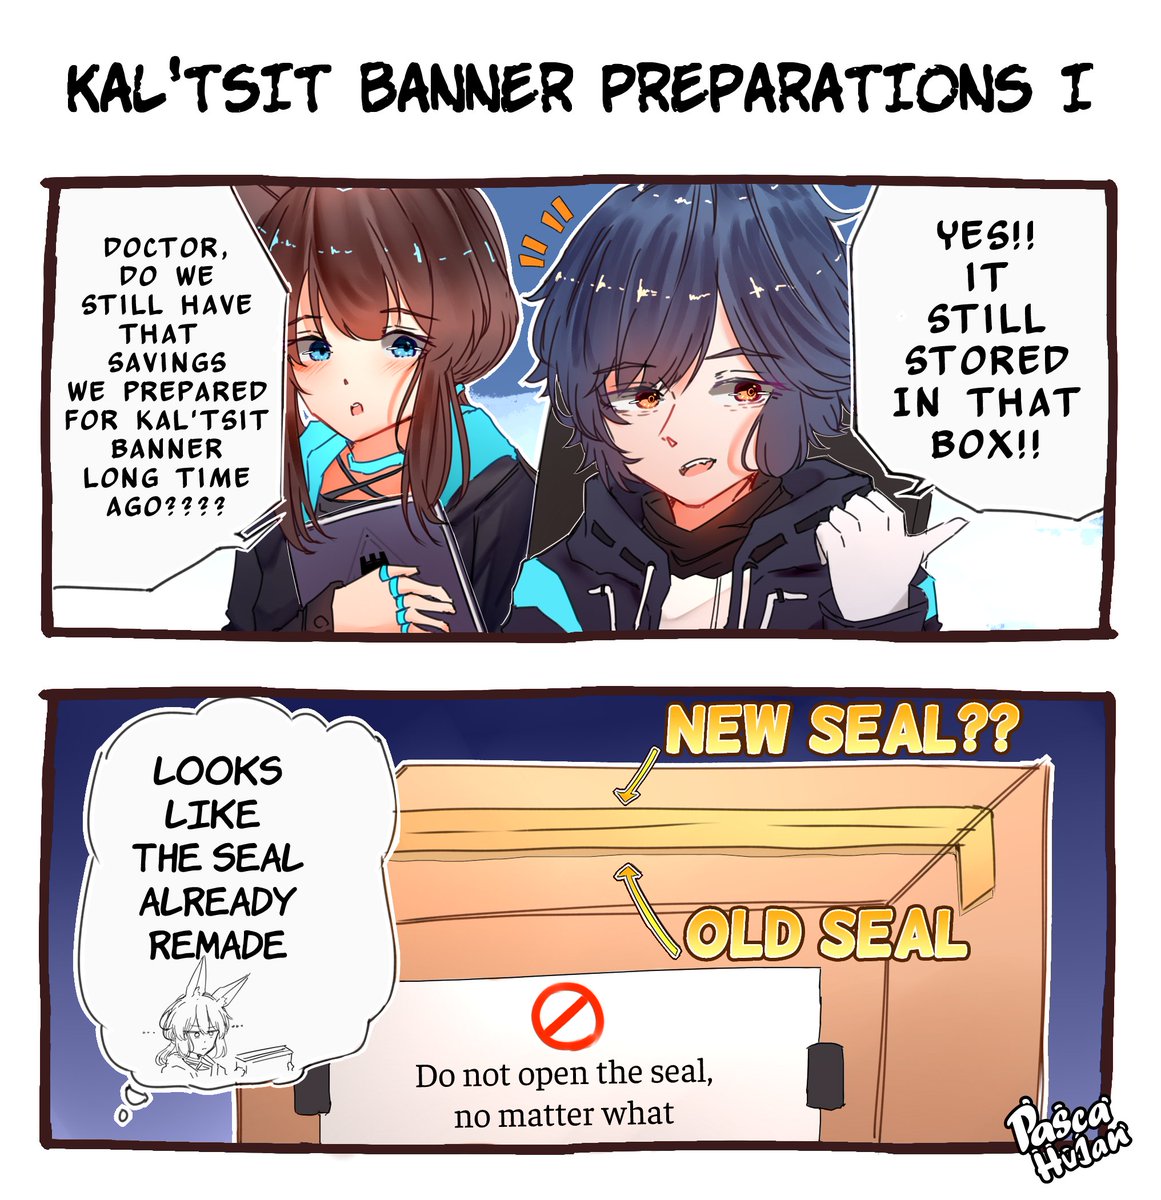 Kal'tsit banner preparations 1
---
#明日方舟 #アークナイツ #명일방주 #Arknights 